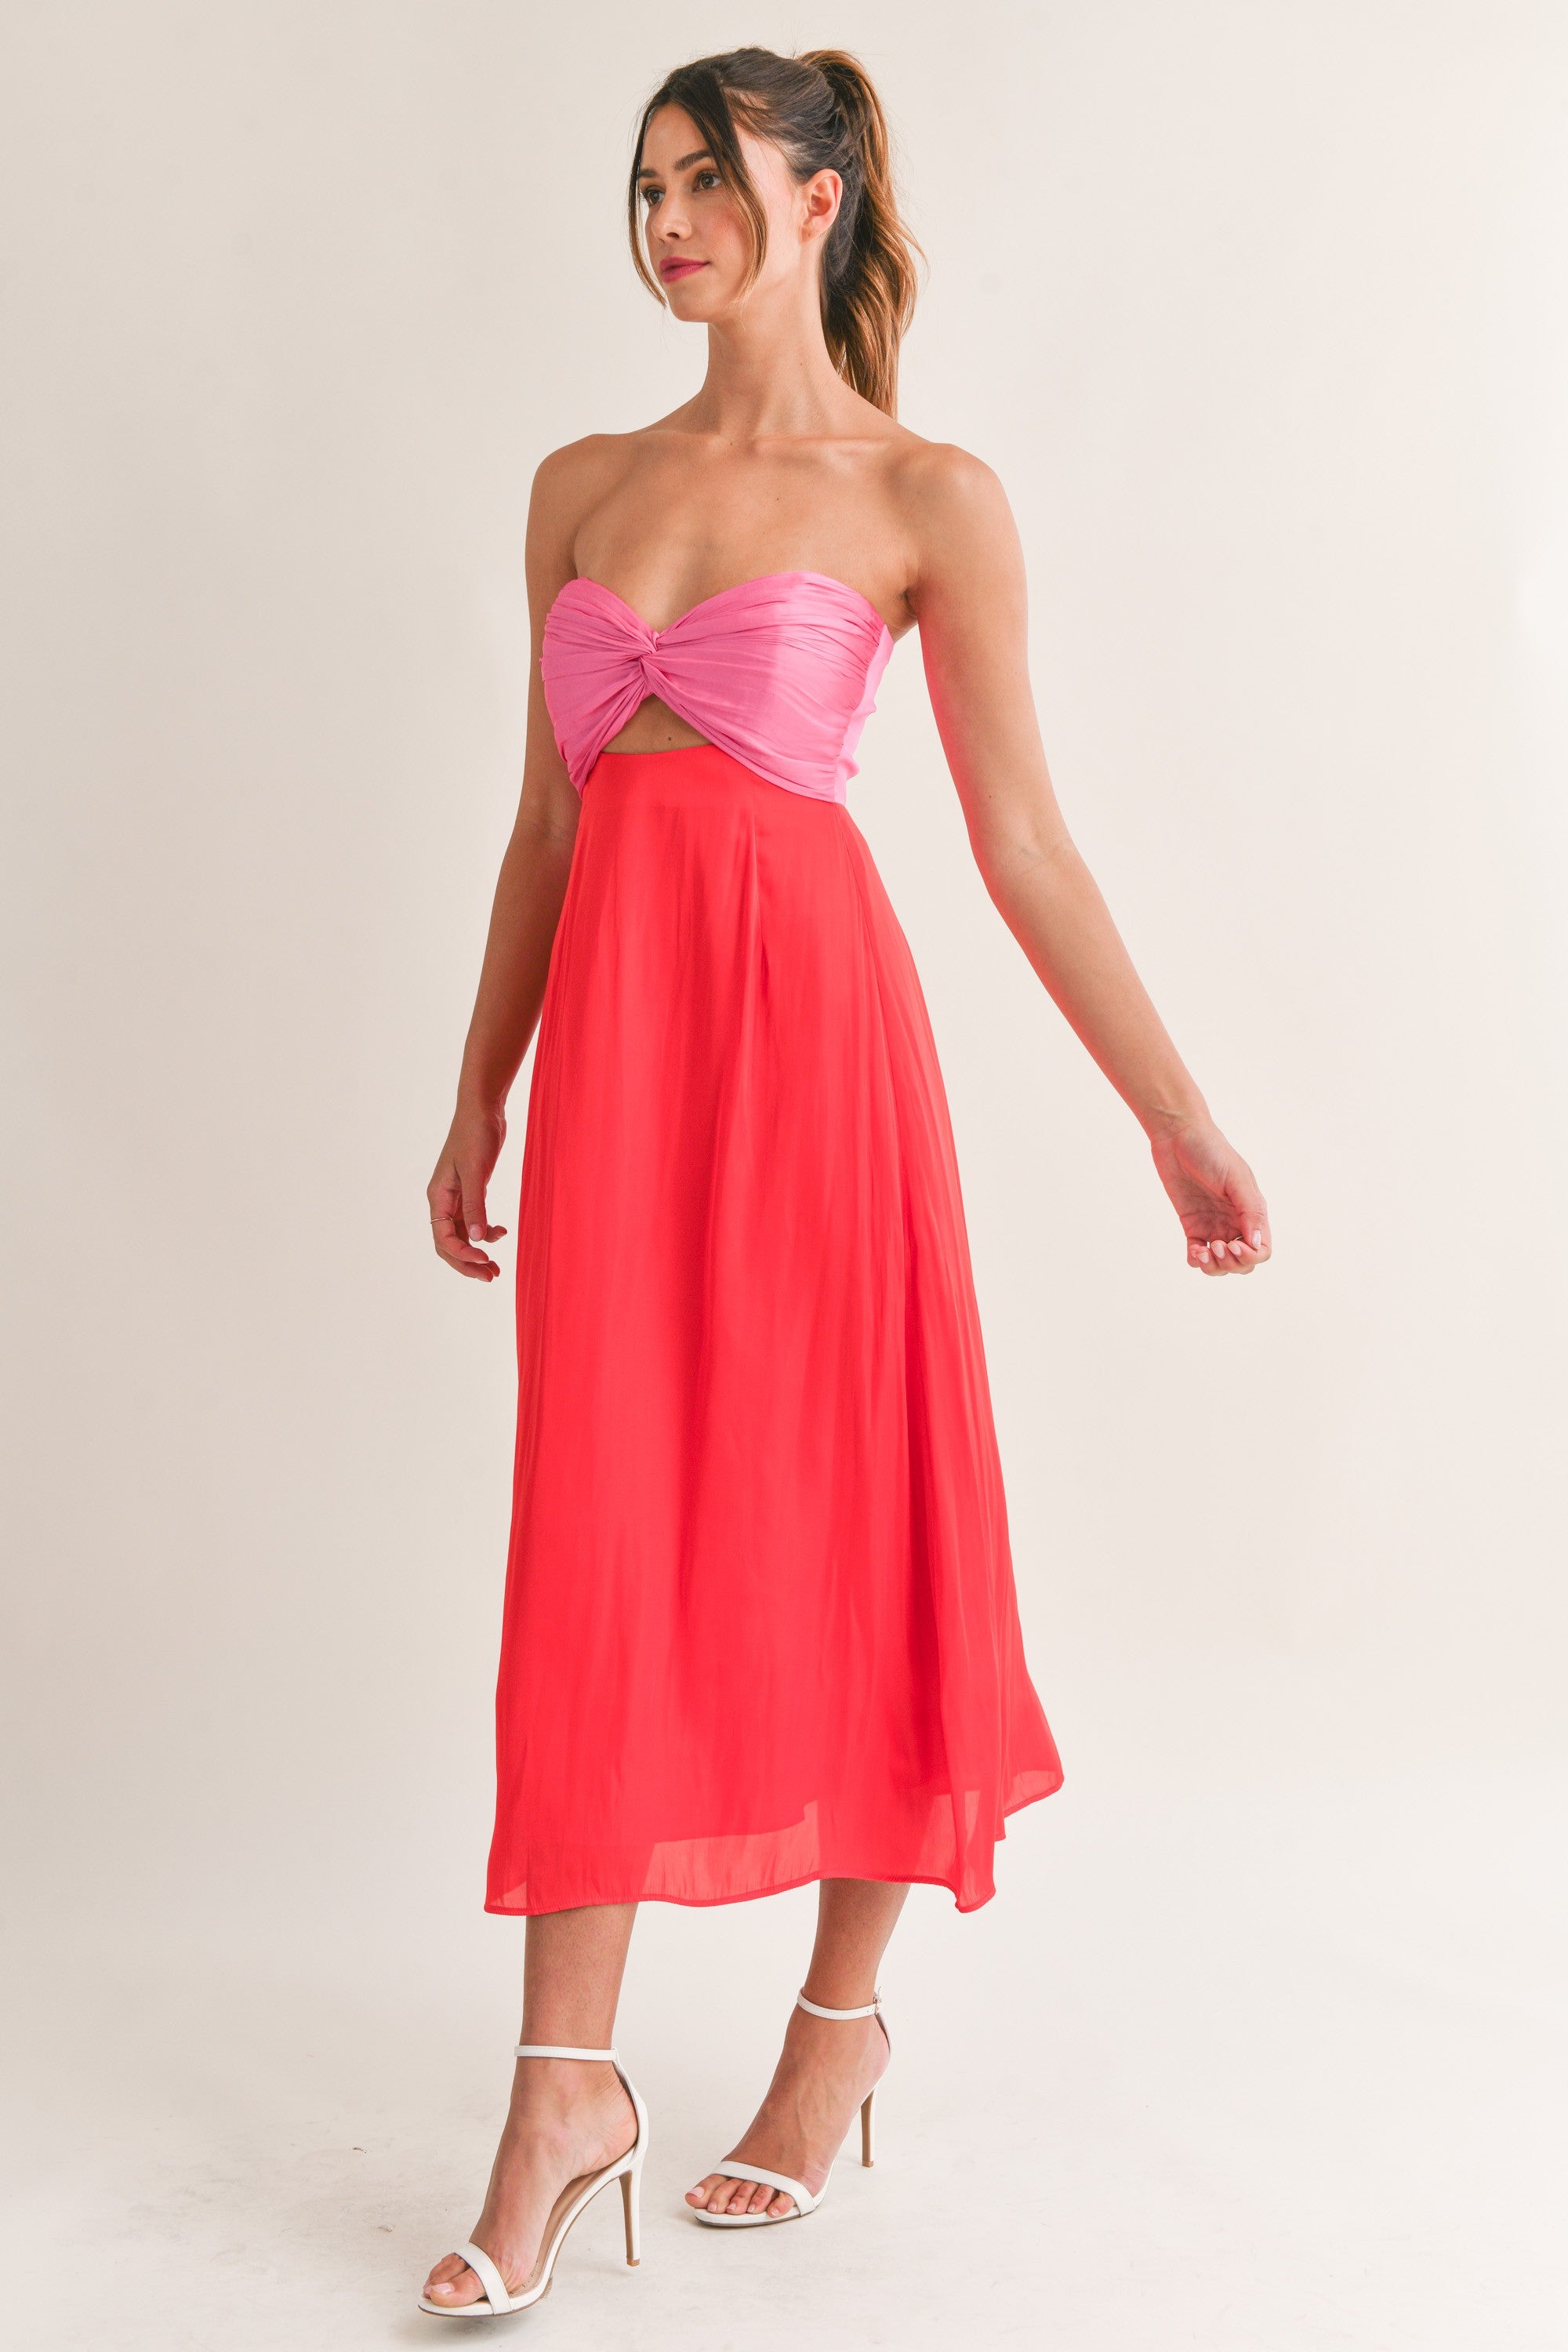 The Penelope Color Block Midi Dress *Runway Exclusive*